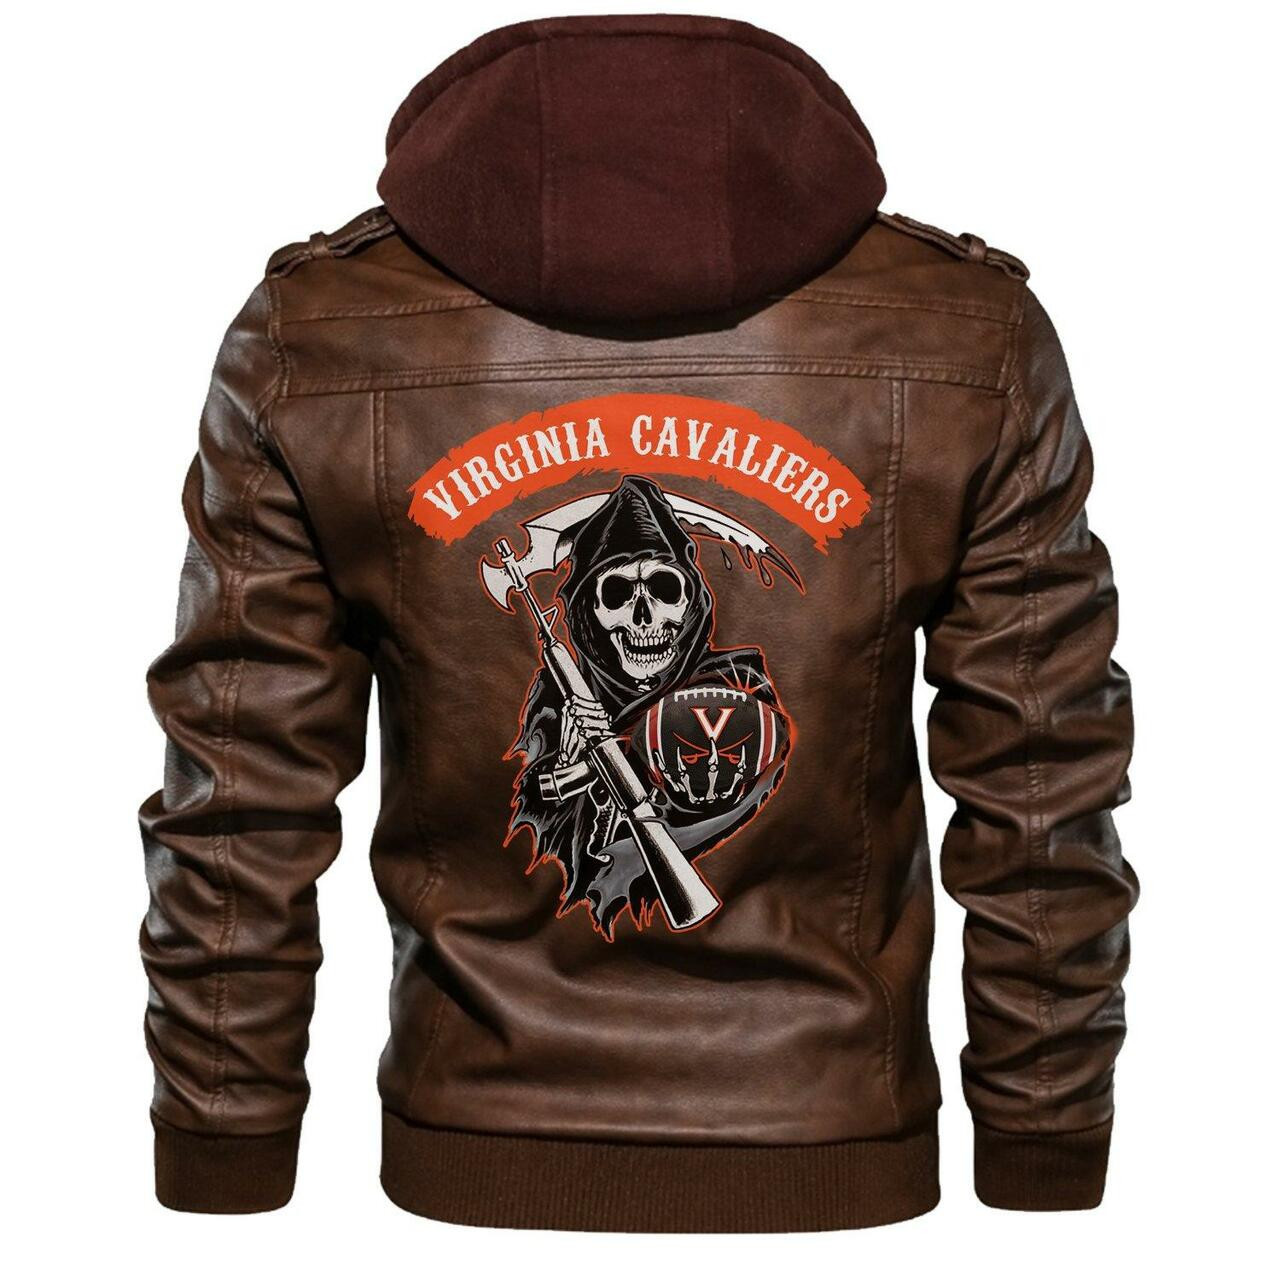 Top leather jacket Sells Best on Techcomshop 117